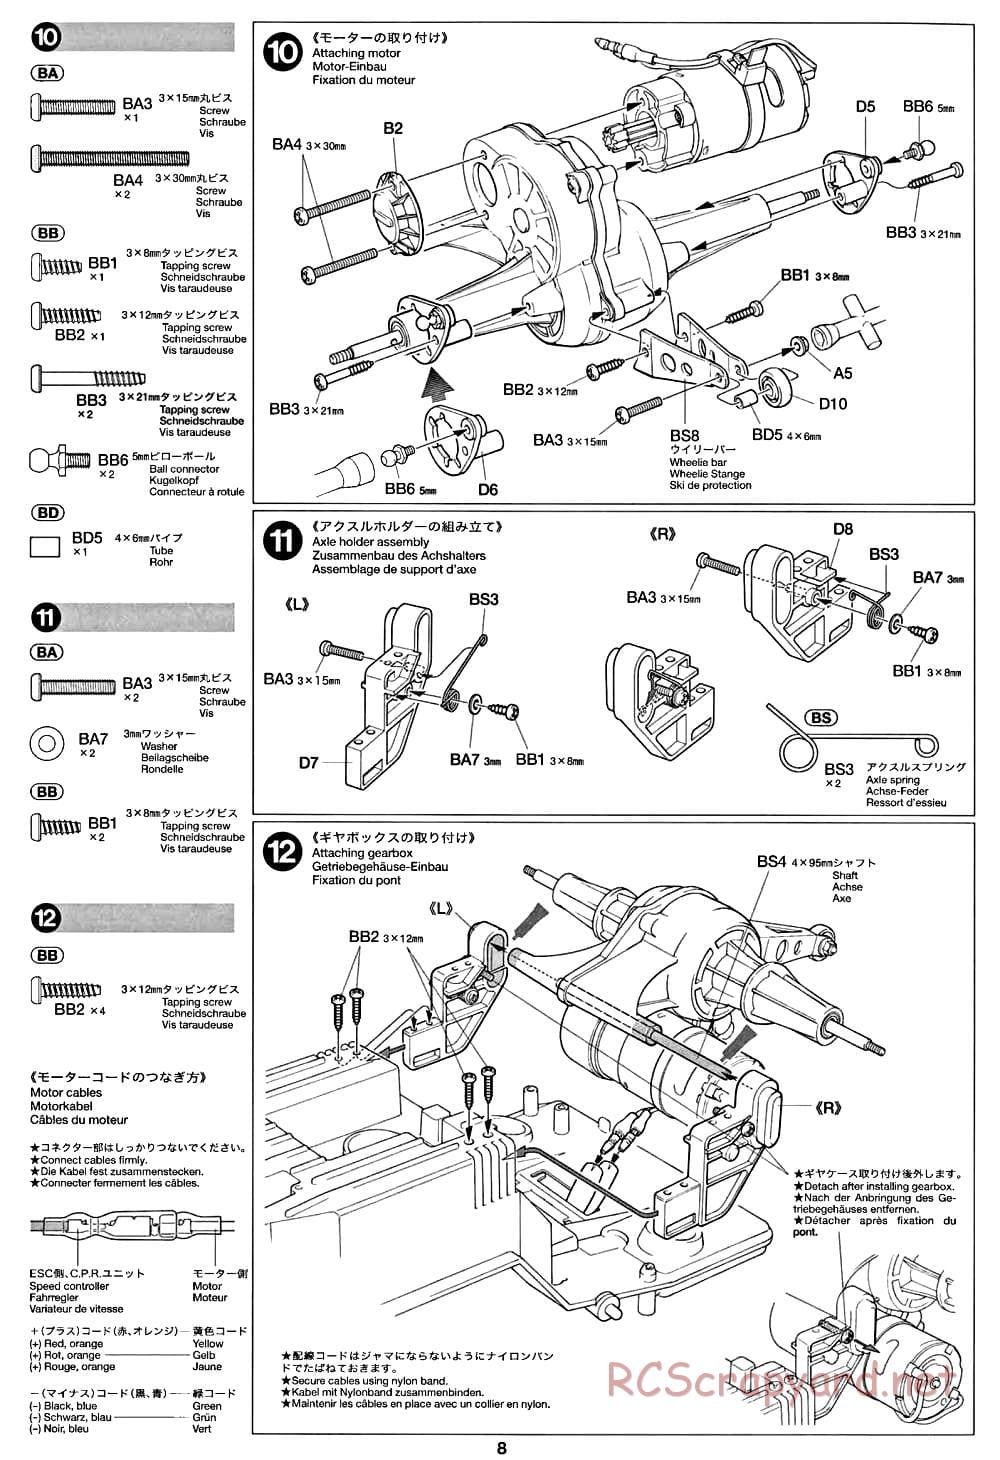 Tamiya - CW-01 Chassis - Manual - Page 8